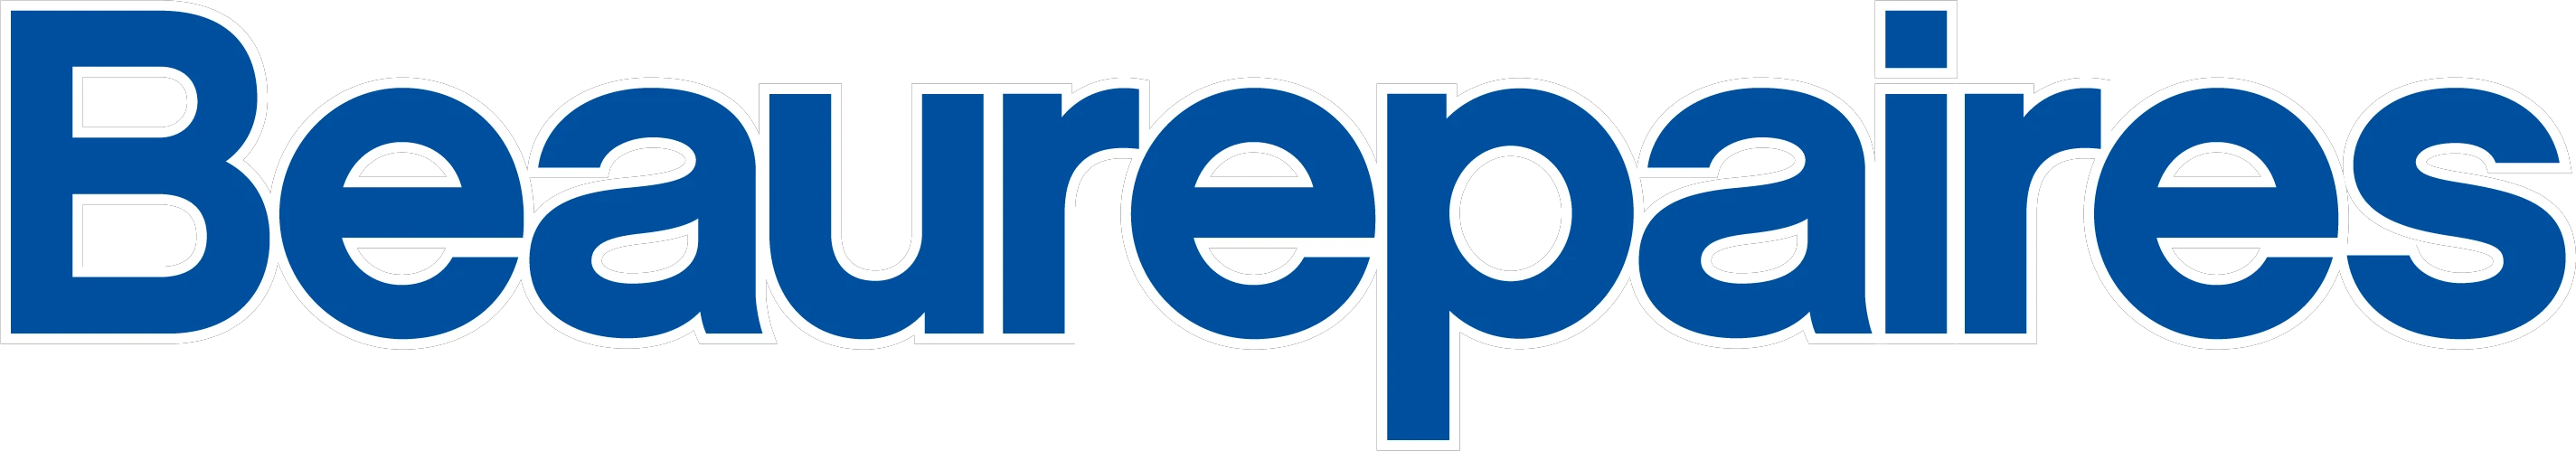  Beaurepaires Logo 쿠폰 코드